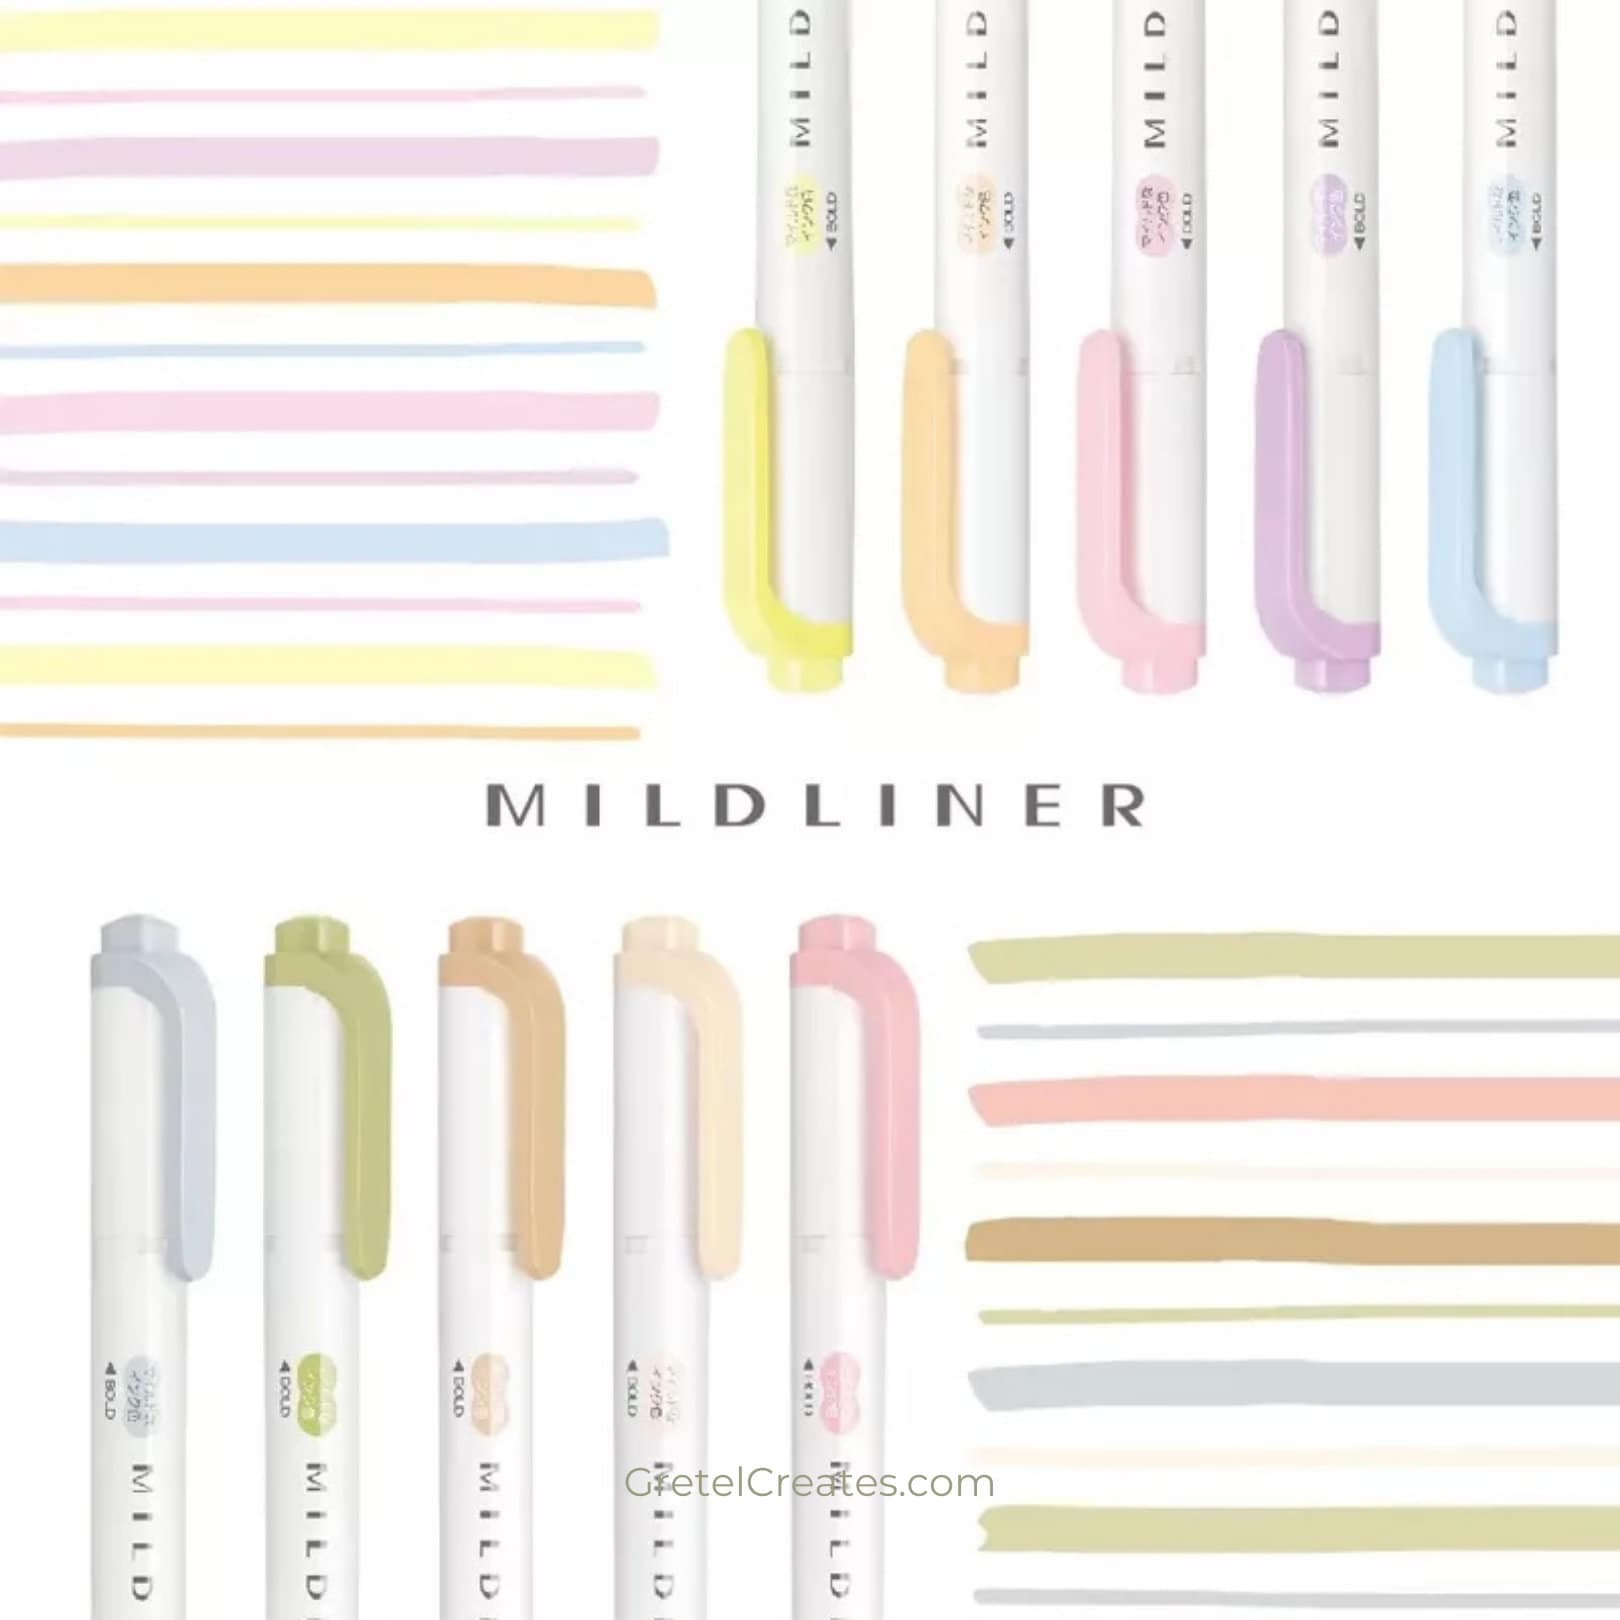 Zebra Pen - The best of both worlds, Mildliner